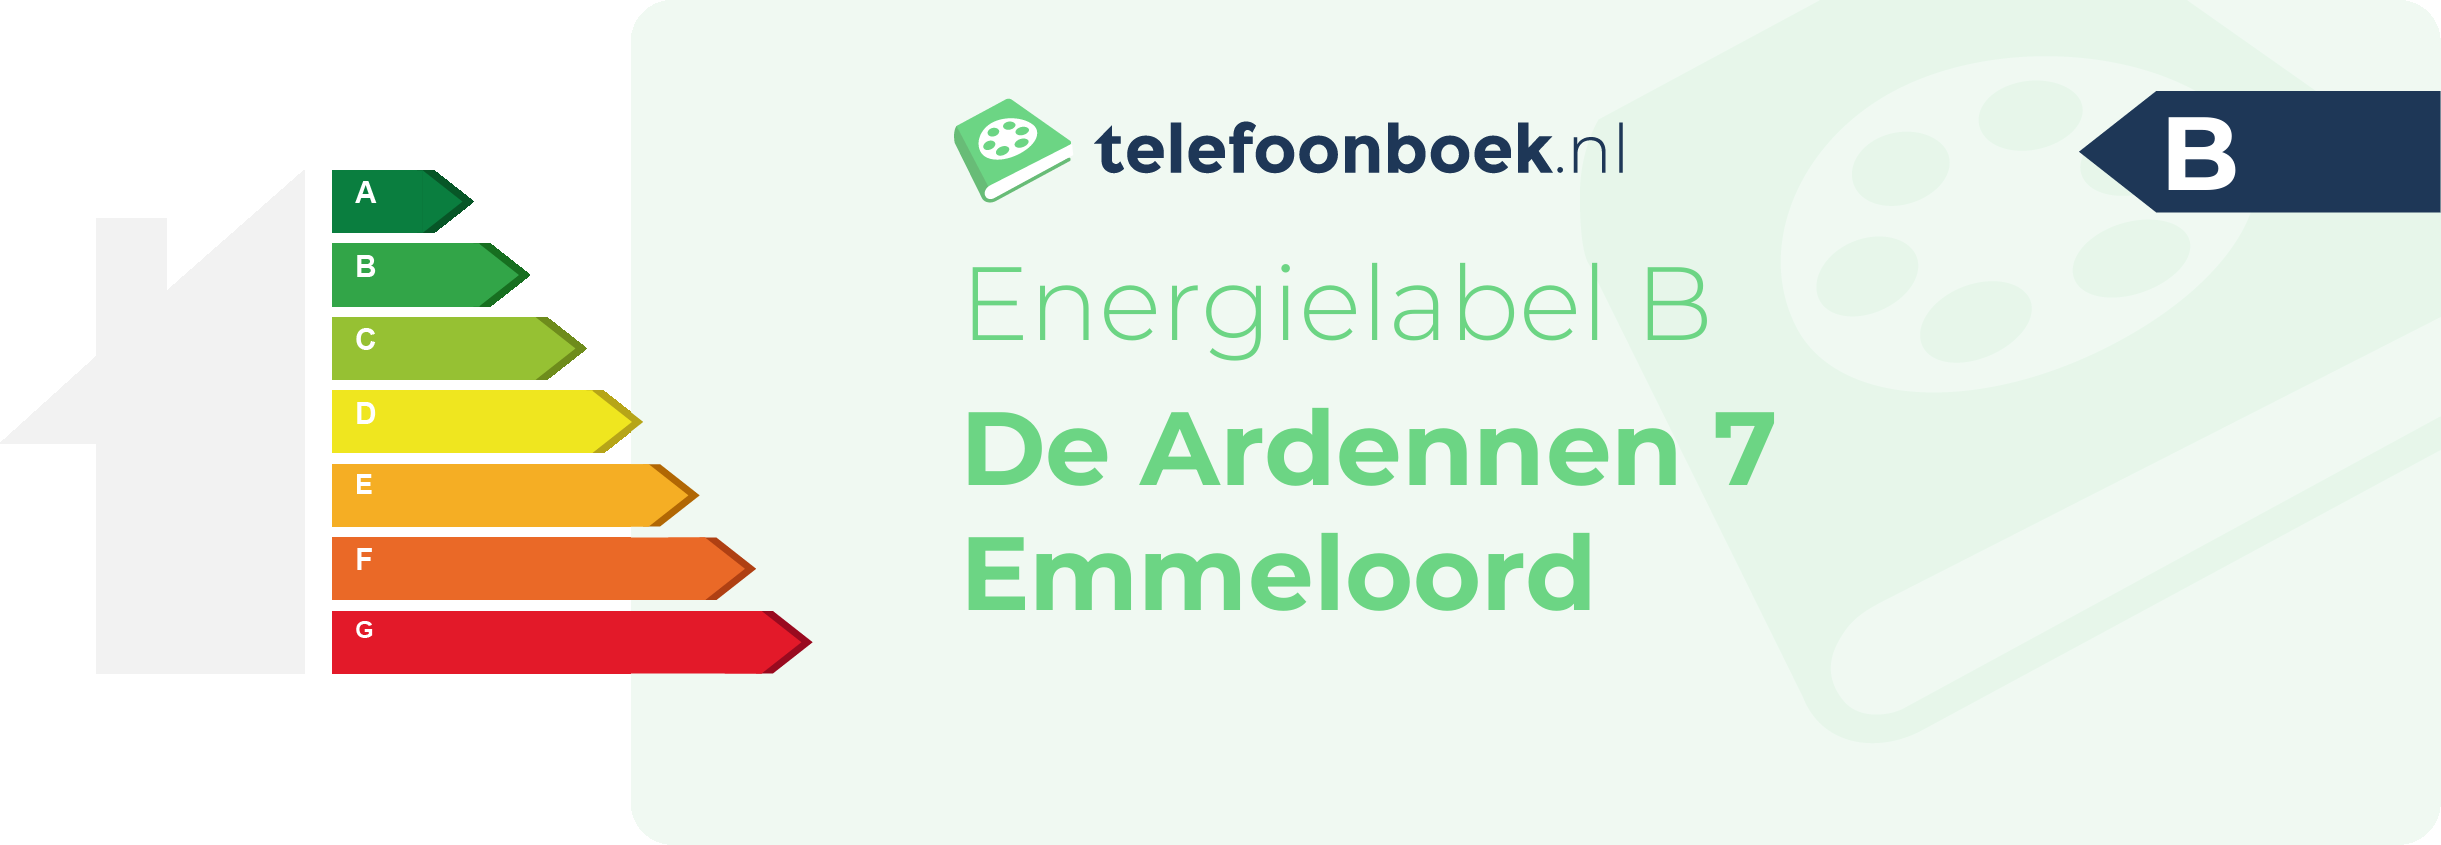 Energielabel De Ardennen 7 Emmeloord